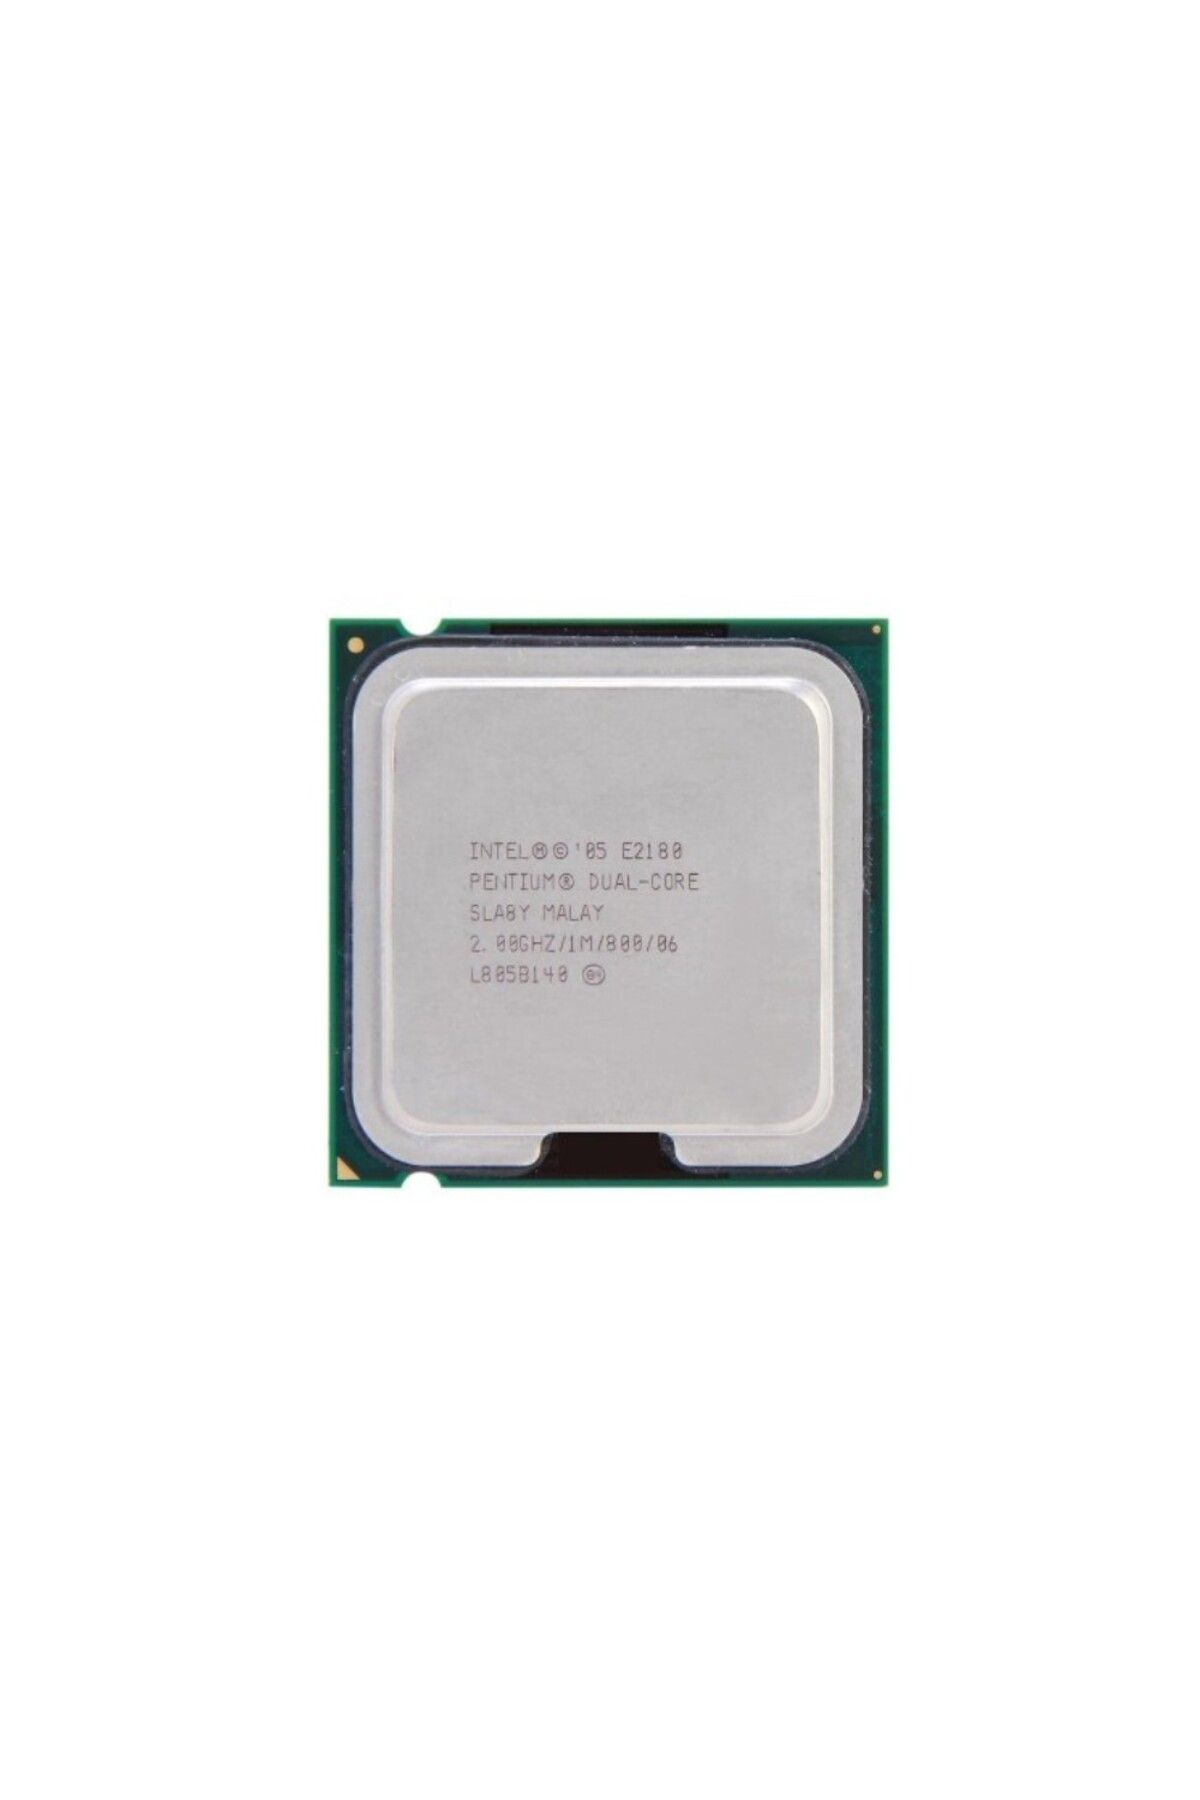 Intel ® Pentium® Processor E2180